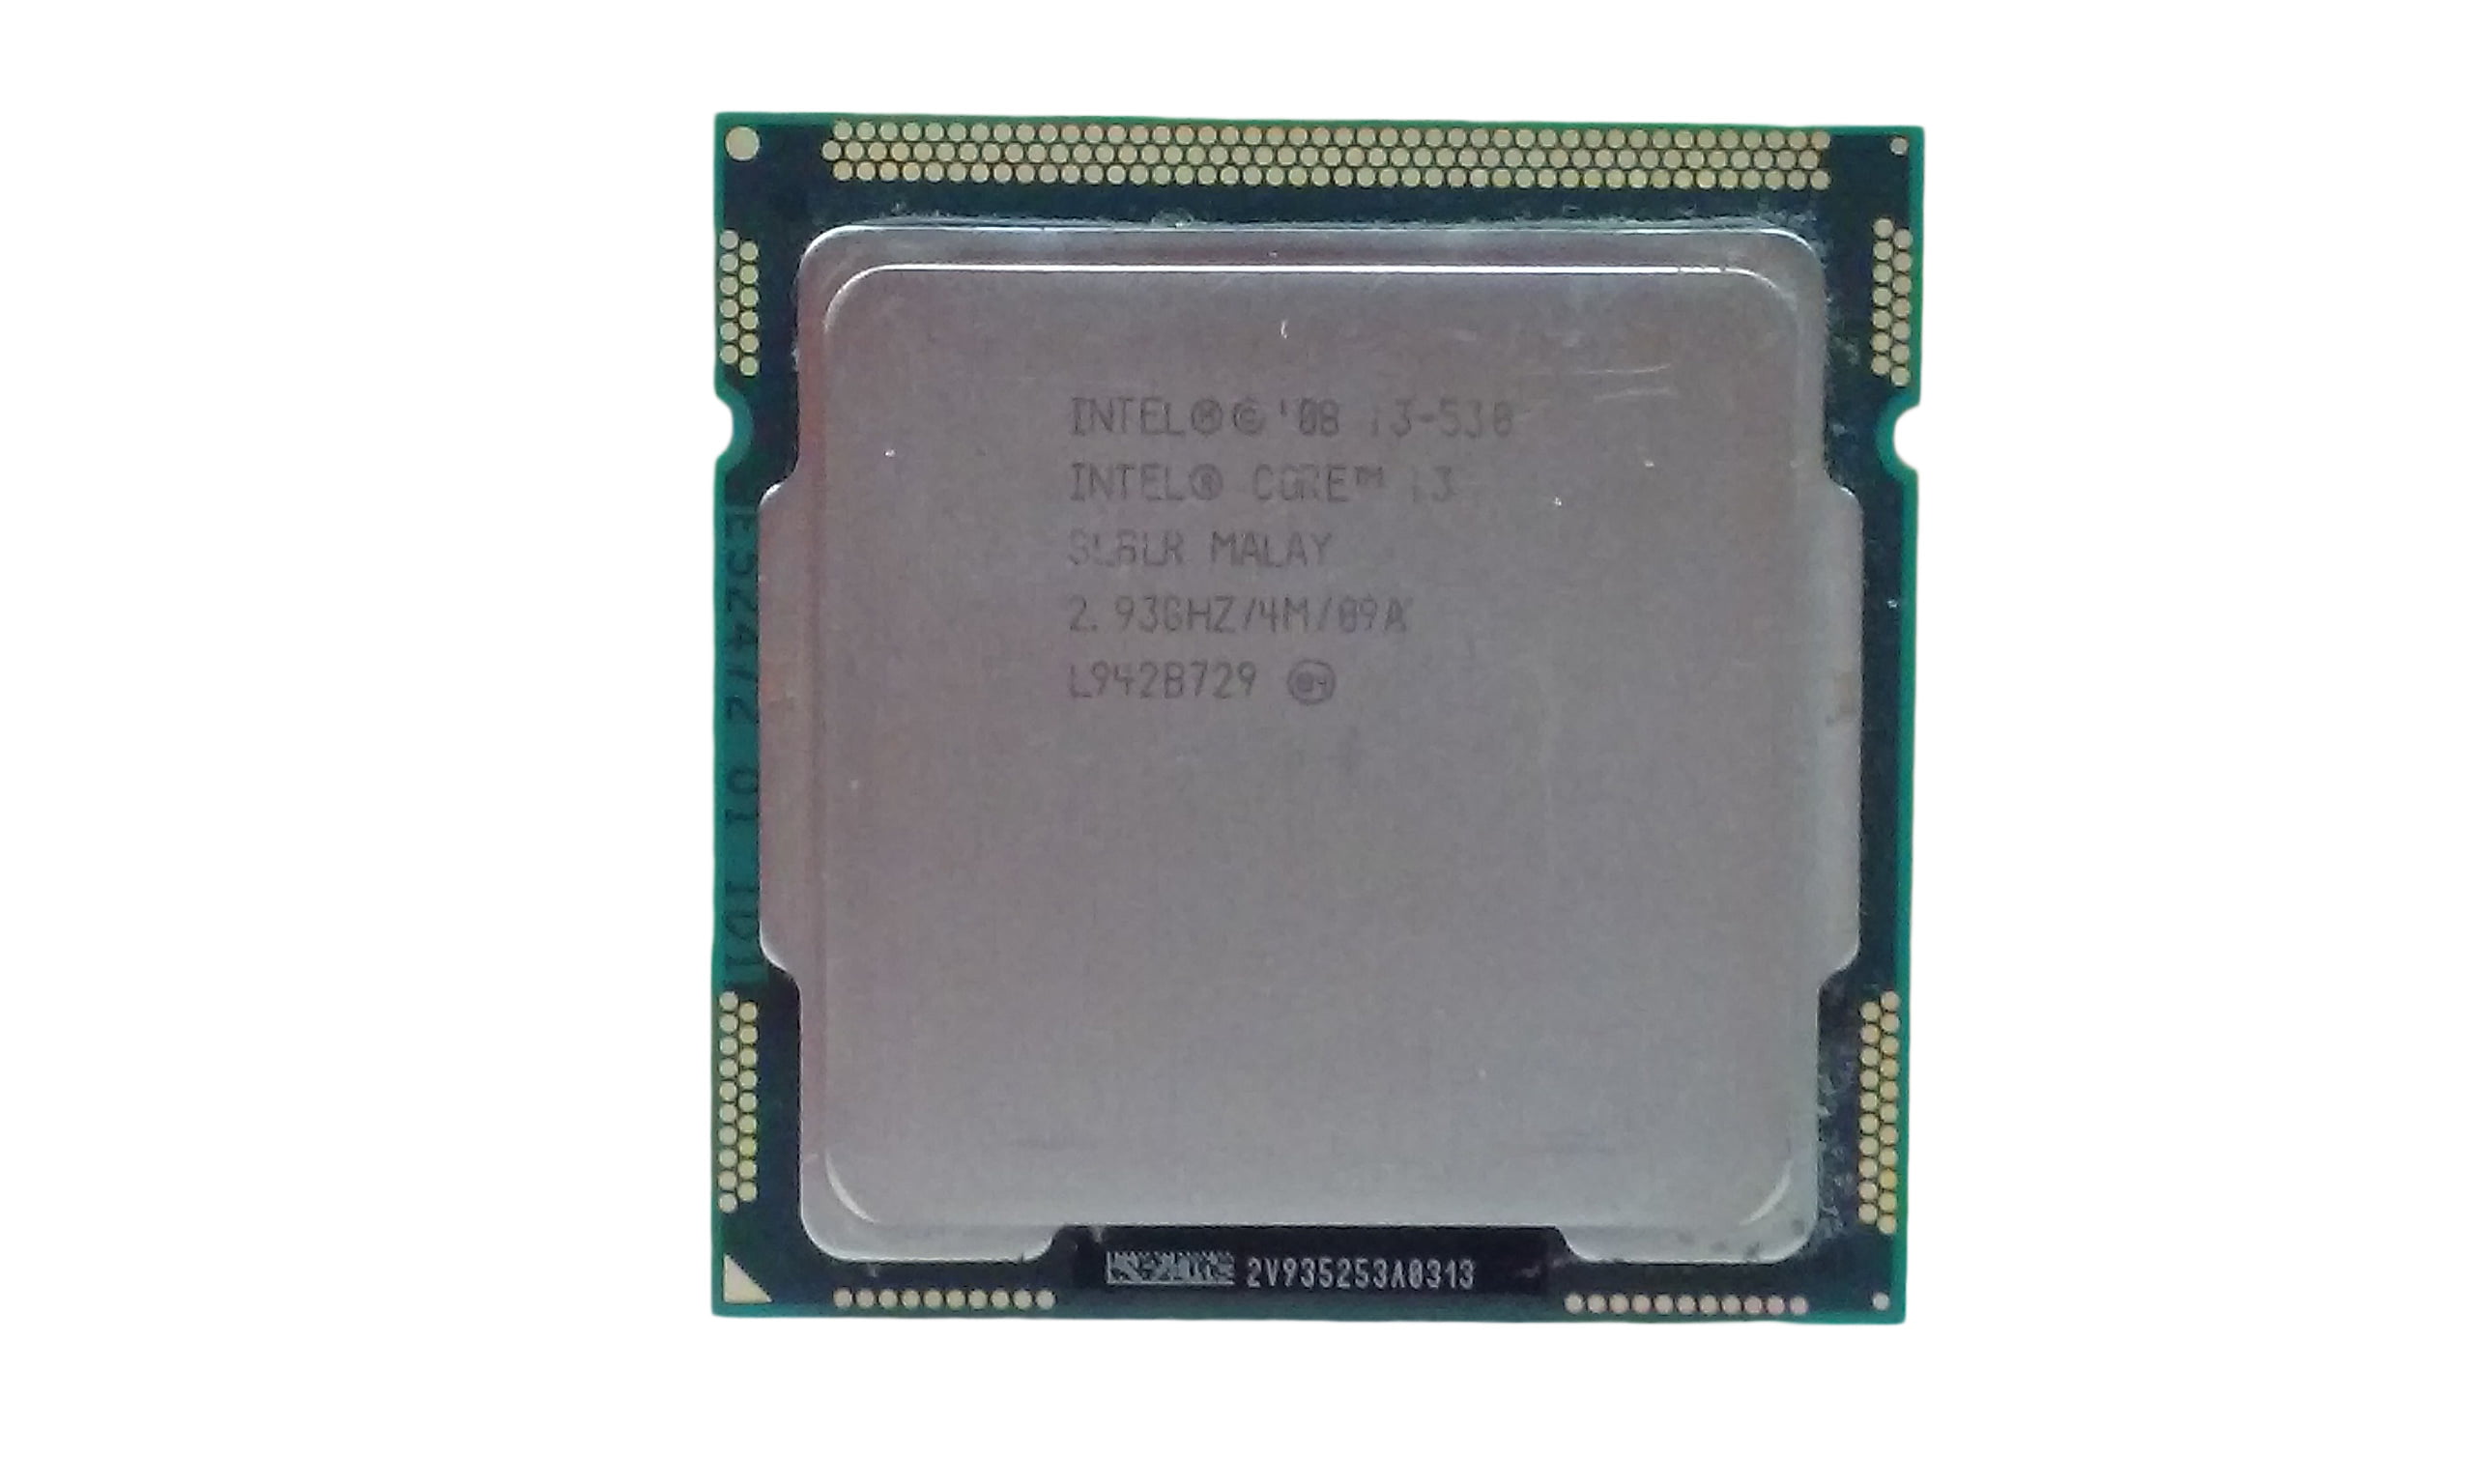 Intel core i3 какой сокет. Intel Core i5 650. Intel Core i5-650 3.2GHZ. Процессор Intel Core i5 Processor 650. Процессор i3 530.